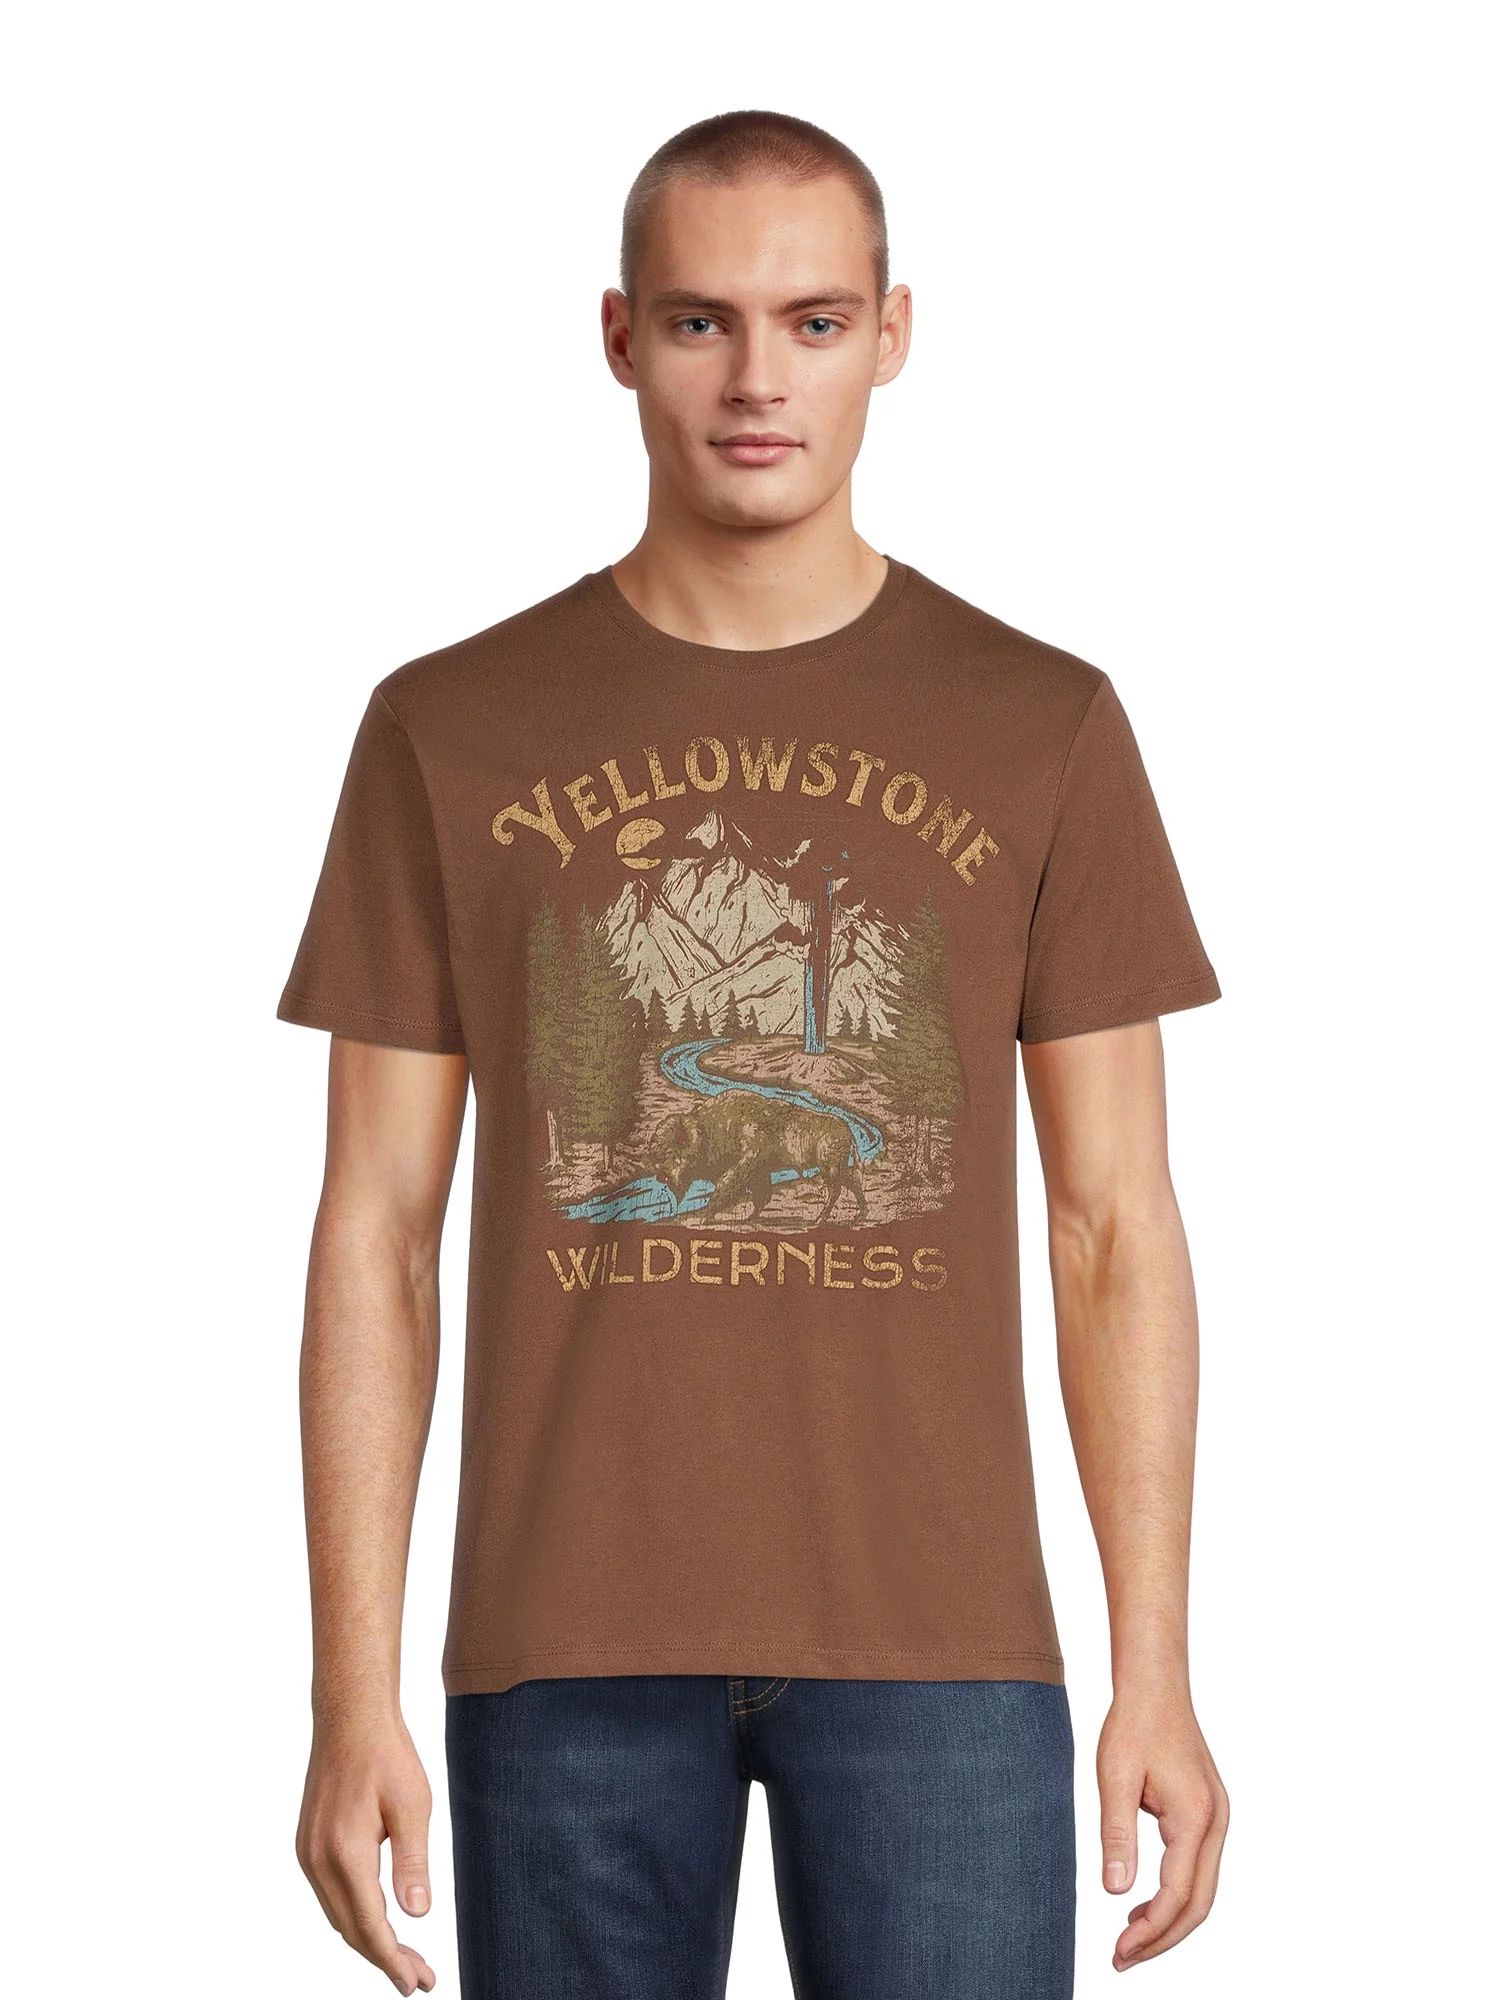 Grayson Social Men’s Yellowstone Wilderness Graphic Tee, Sizes S-3XL | Walmart (US)